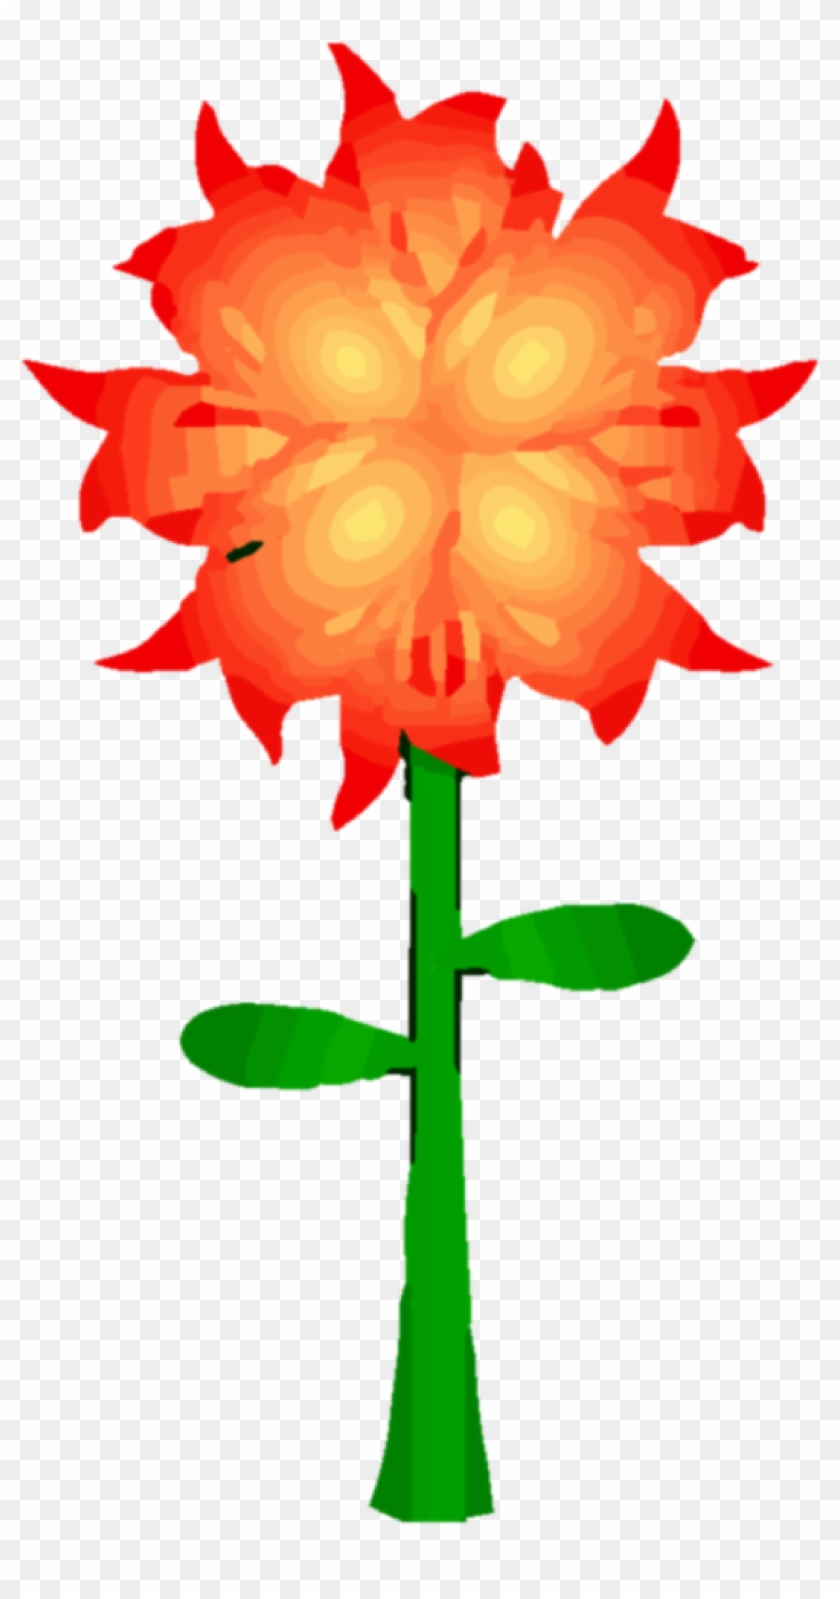 Fire Flower Png Clipart - Flower On Fire Clipart Transparent Png #862426